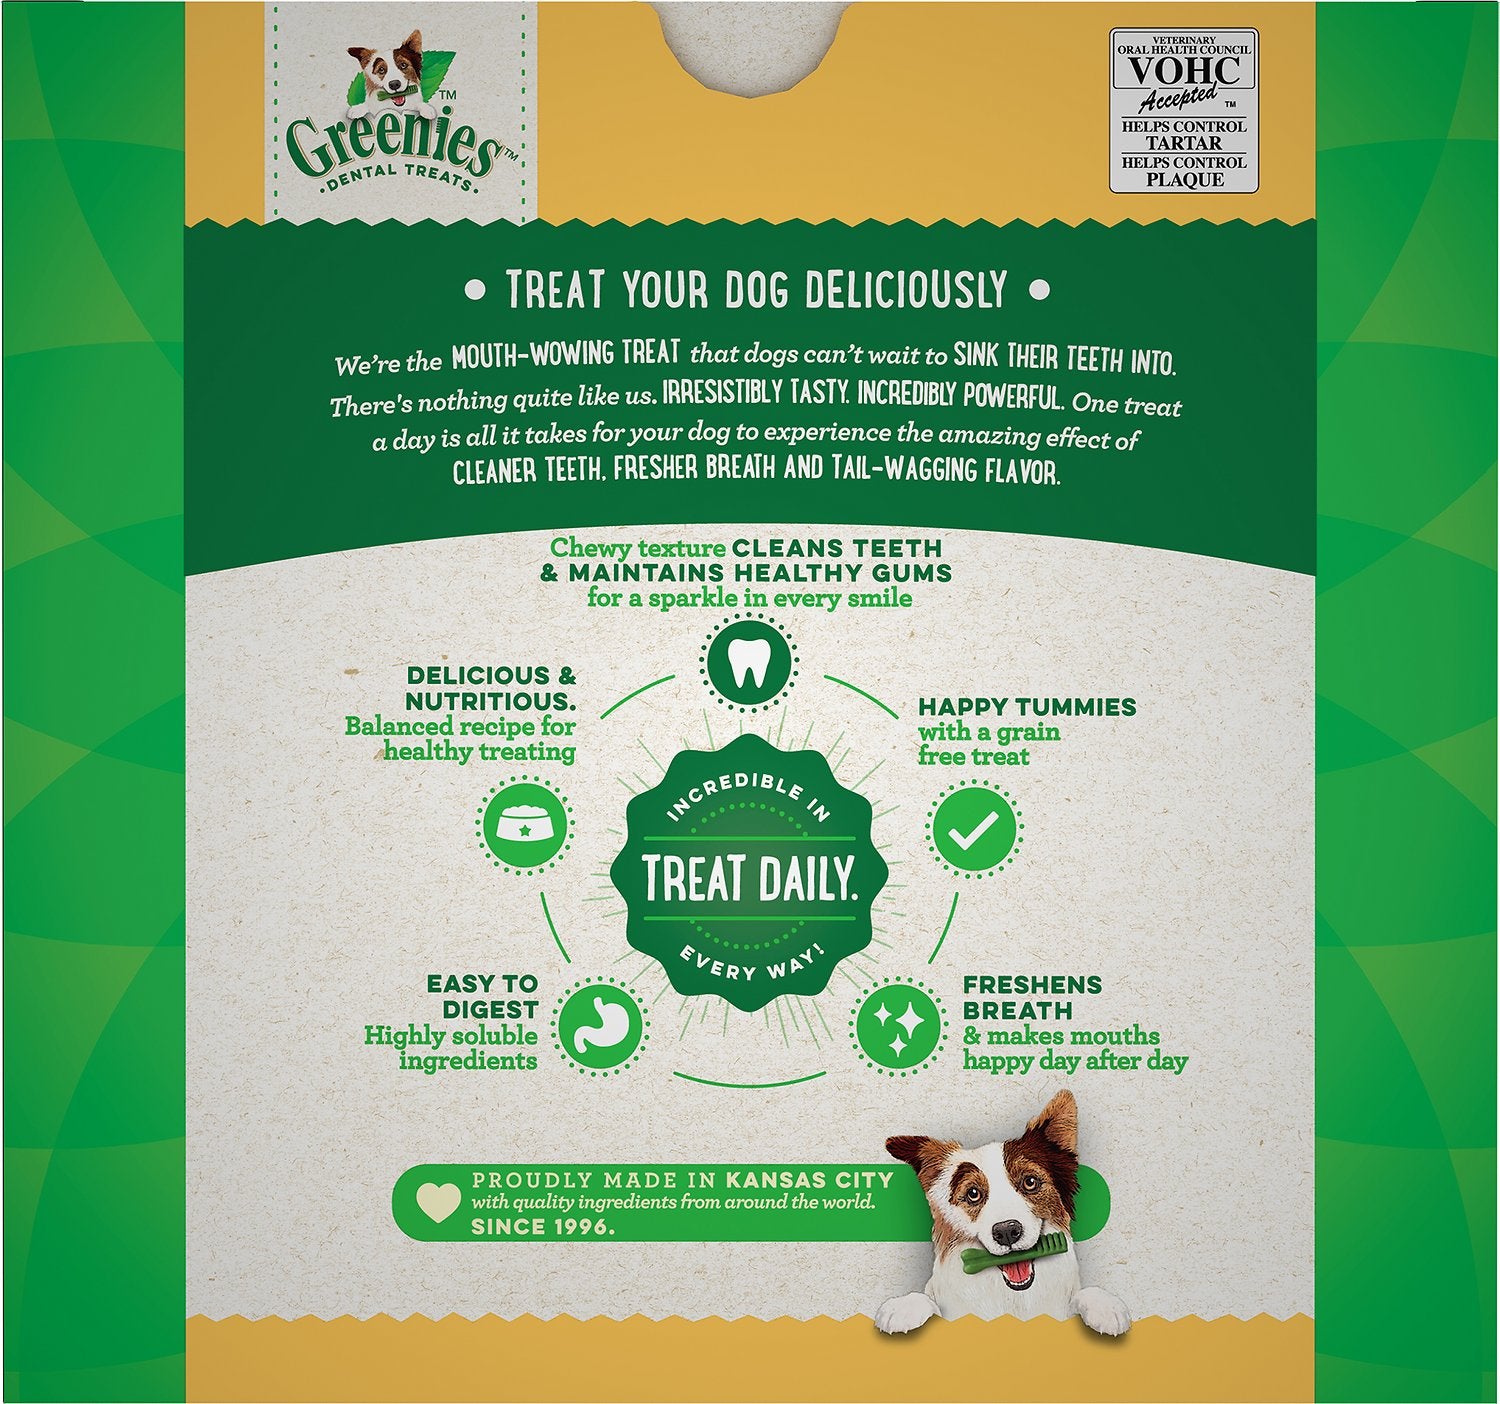 Canine's World Dental Chews & Treats For Dogs Greenies Grain Free Large Dental Dog Treat Greenies